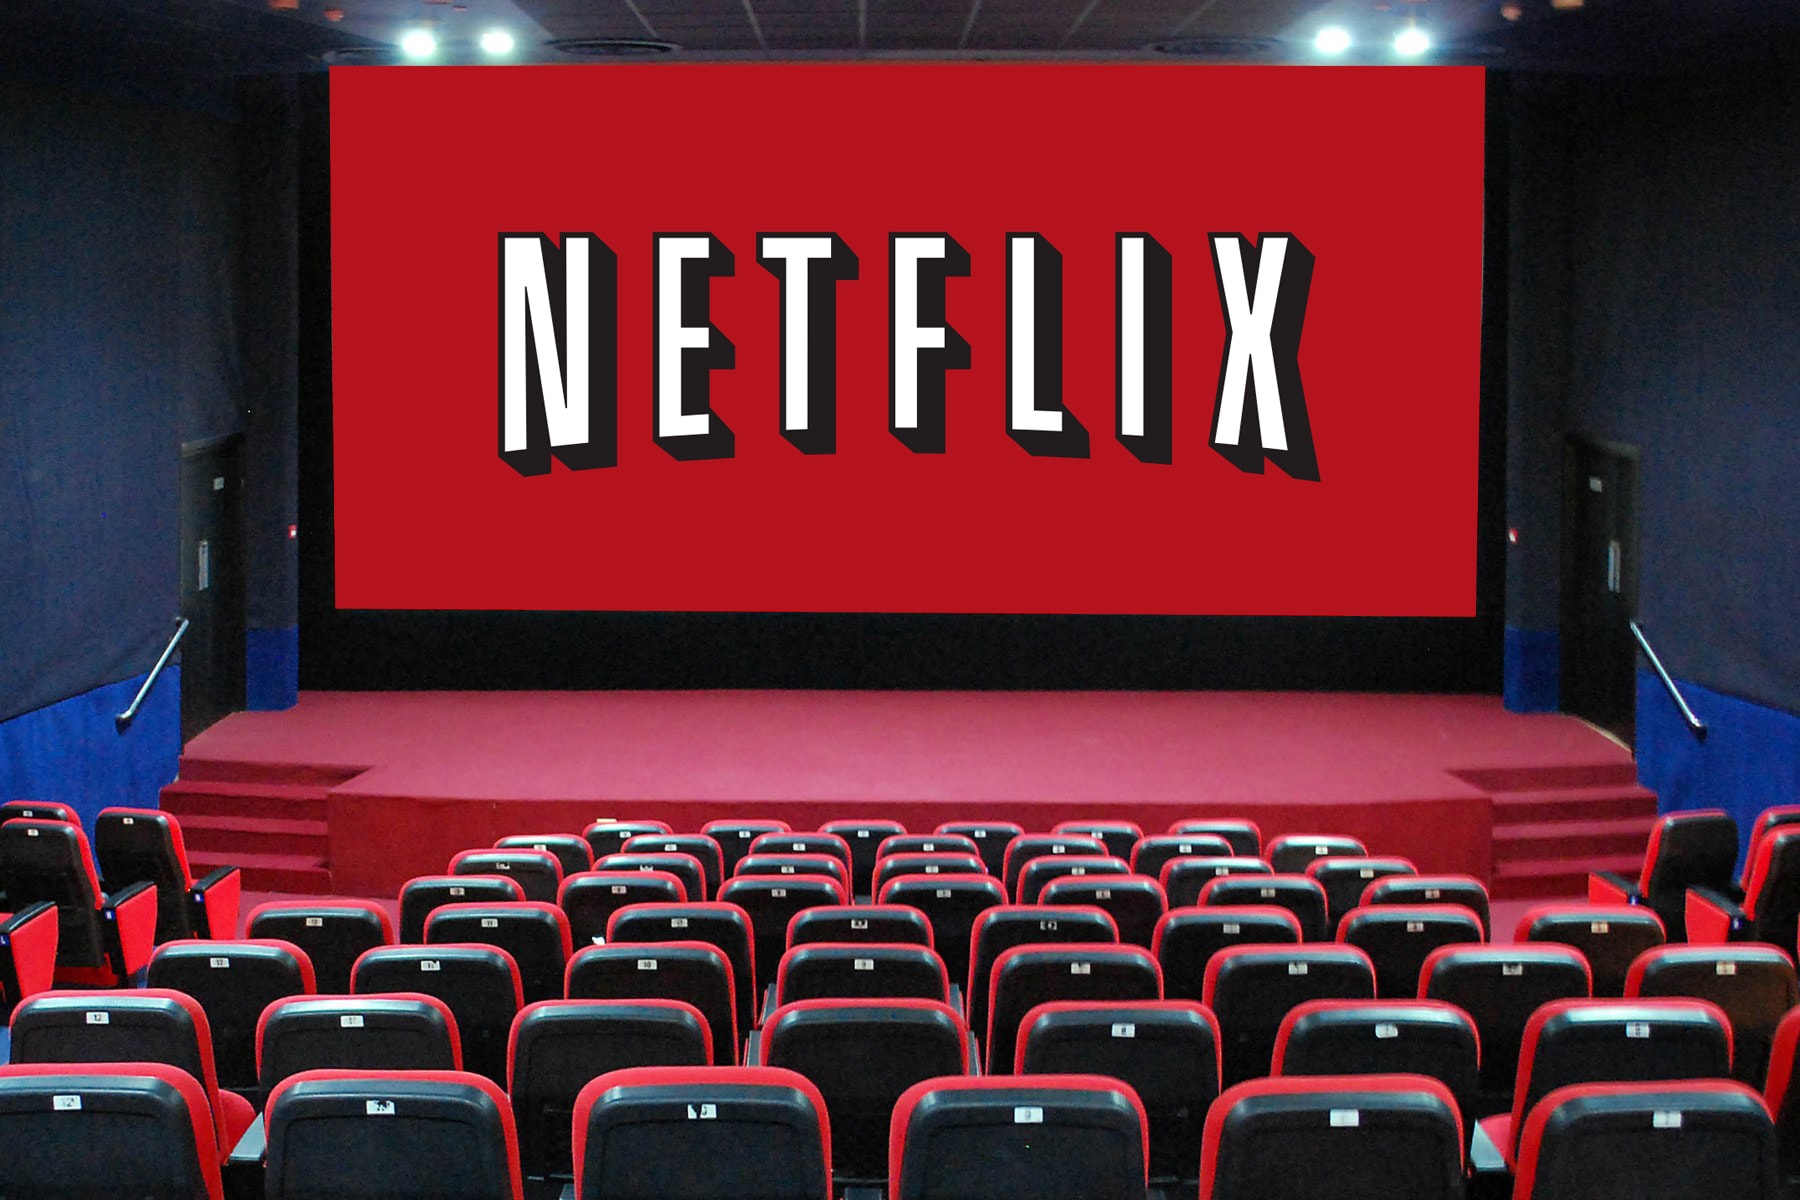 Netflix Original Movies in Theaters